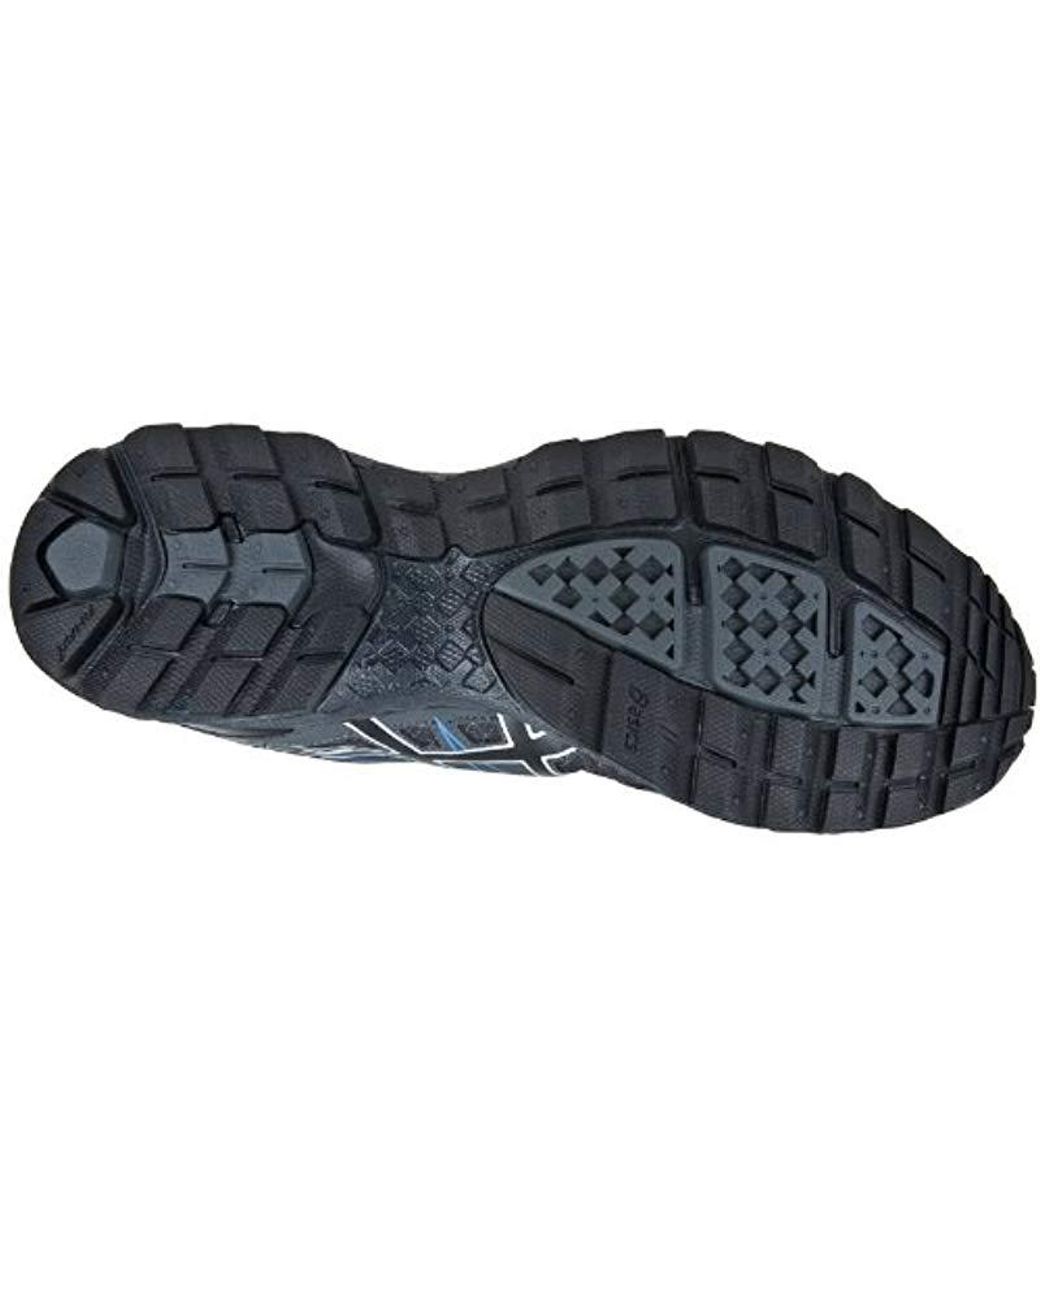 Asics Gel-fuji Storm G-tx Hiking Shoe Black/blue for Men | Lyst UK